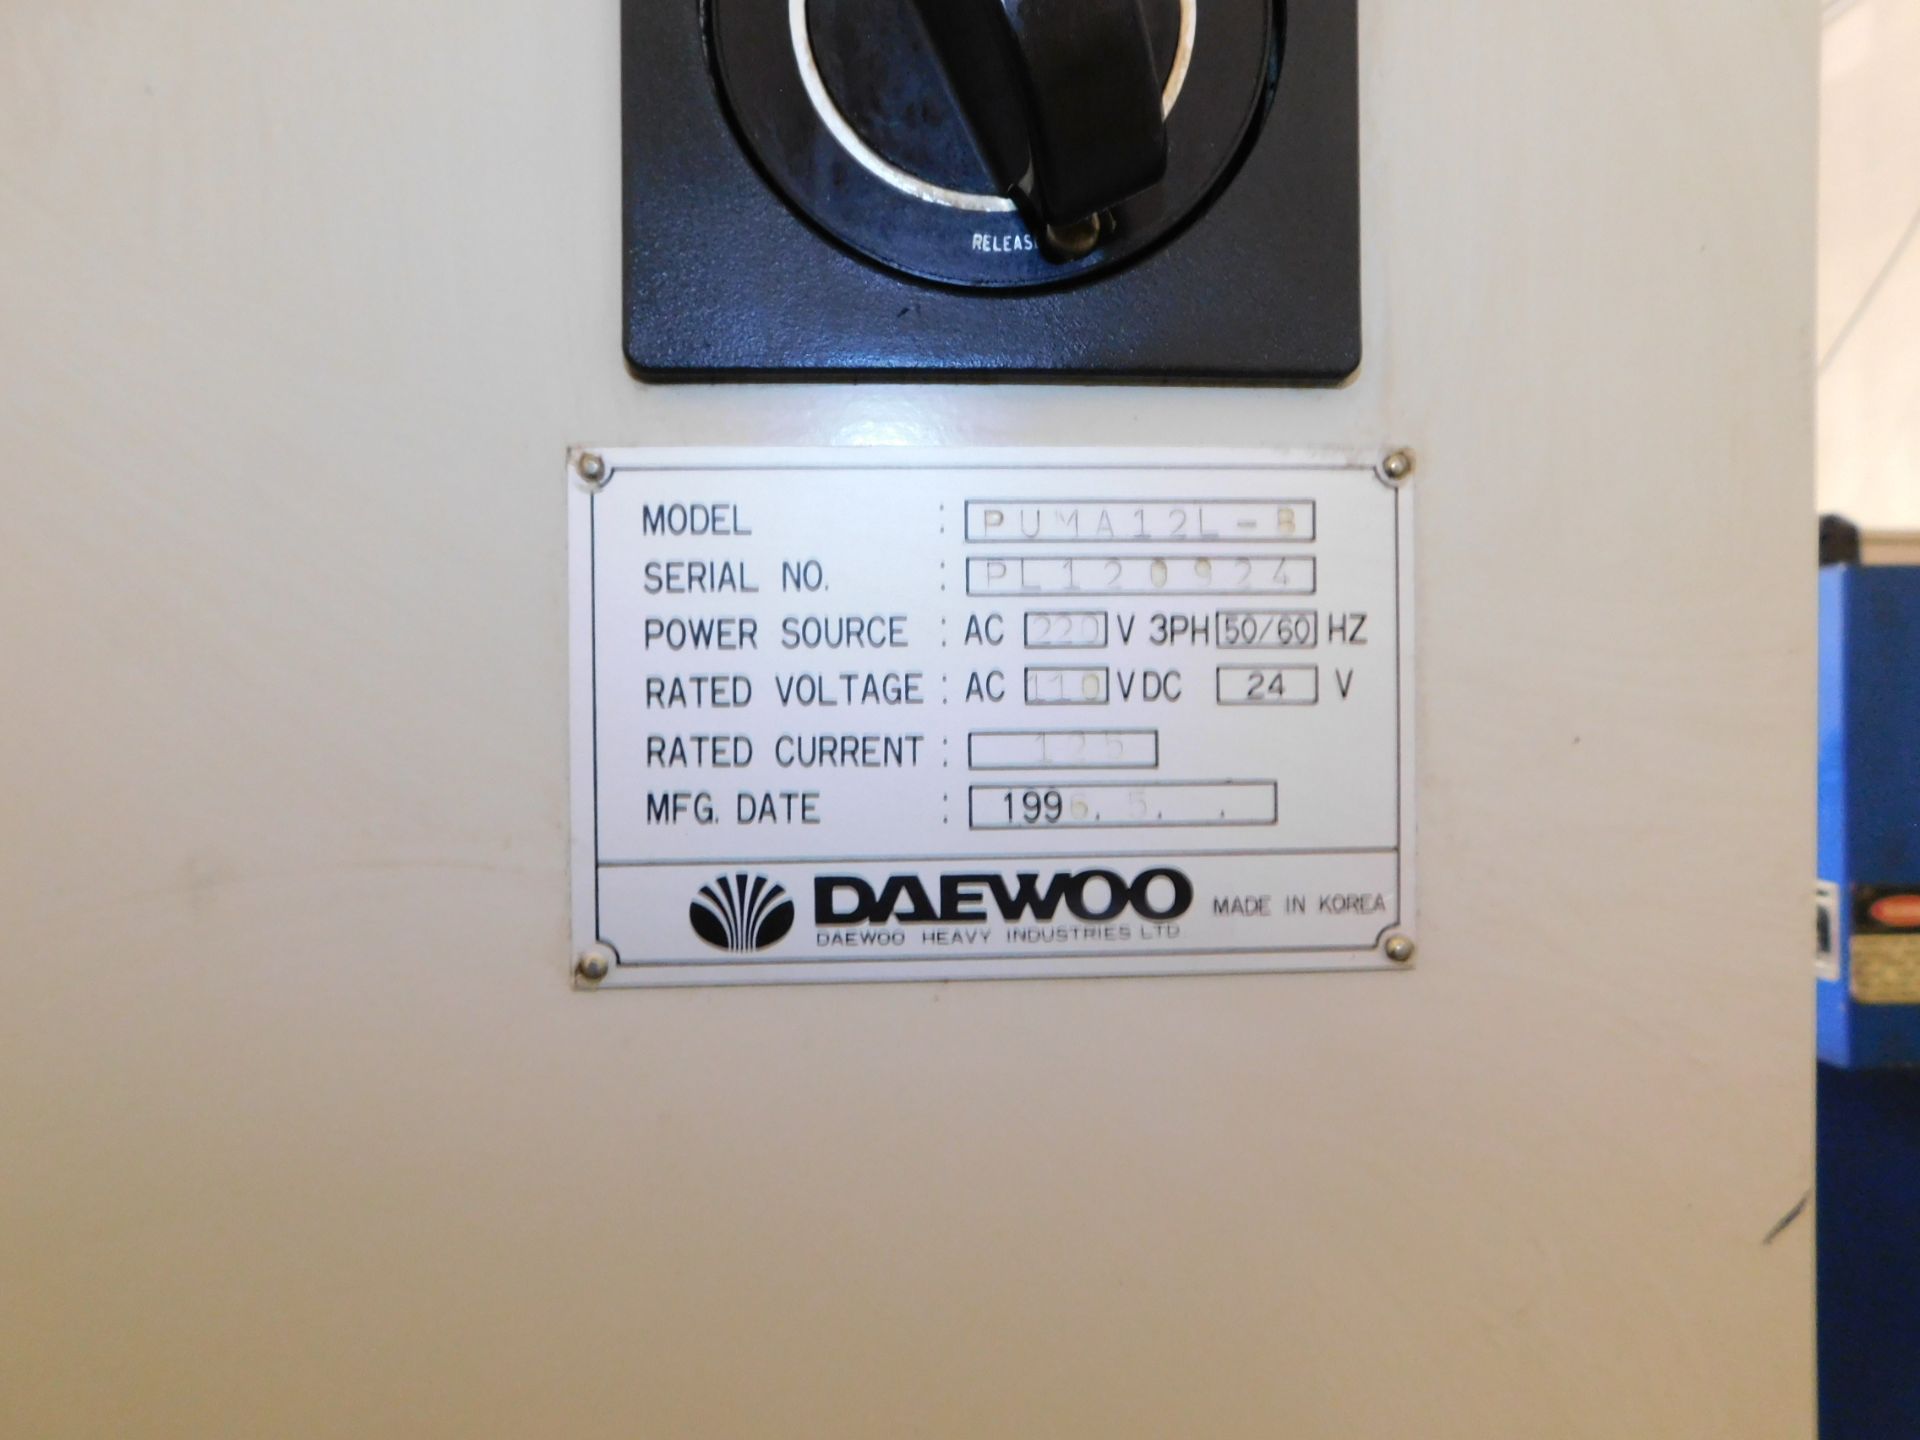 Daewoo Puma Model 12L-B, CNC Turning Center, S/N PL120924, New in 1996, Mitsubishi MELDAS 520 CNC - Image 15 of 17